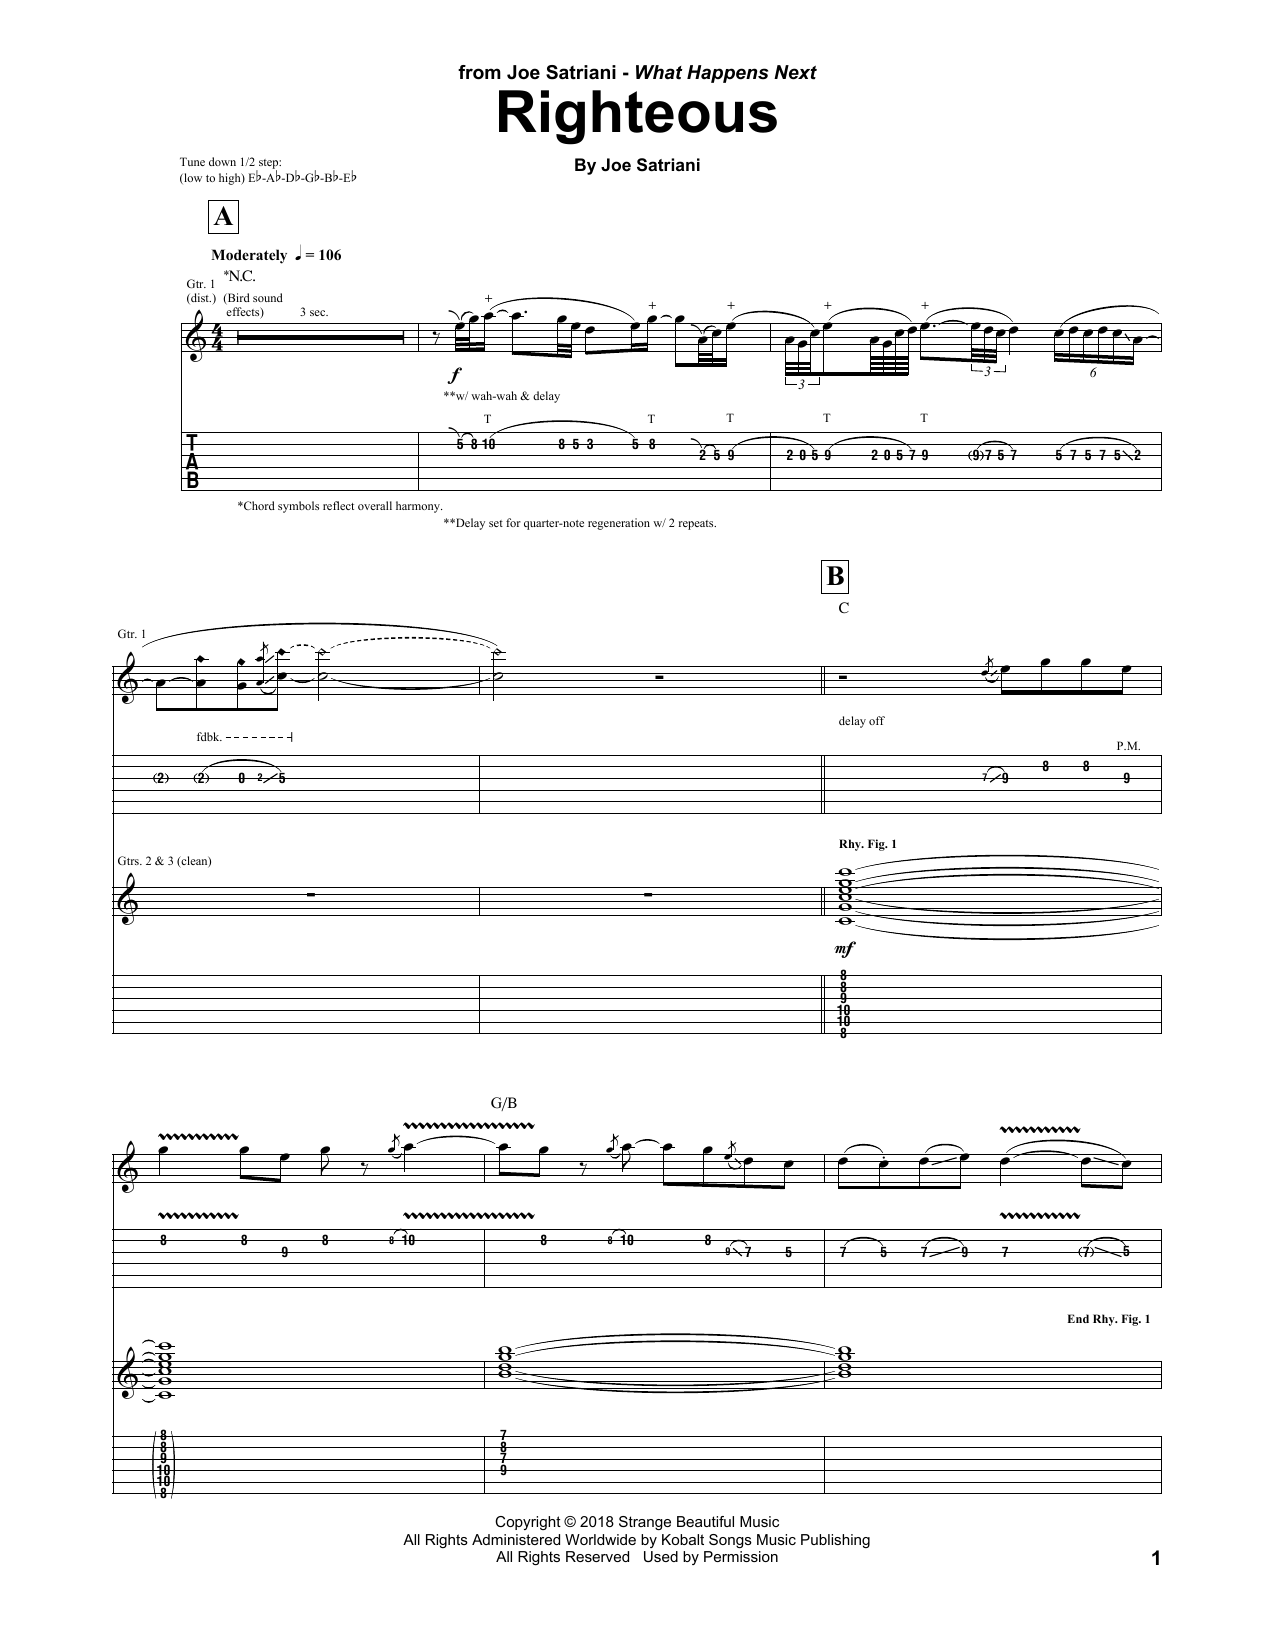 Joe Satriani Righteous Sheet Music Notes & Chords for Guitar Tab - Download or Print PDF